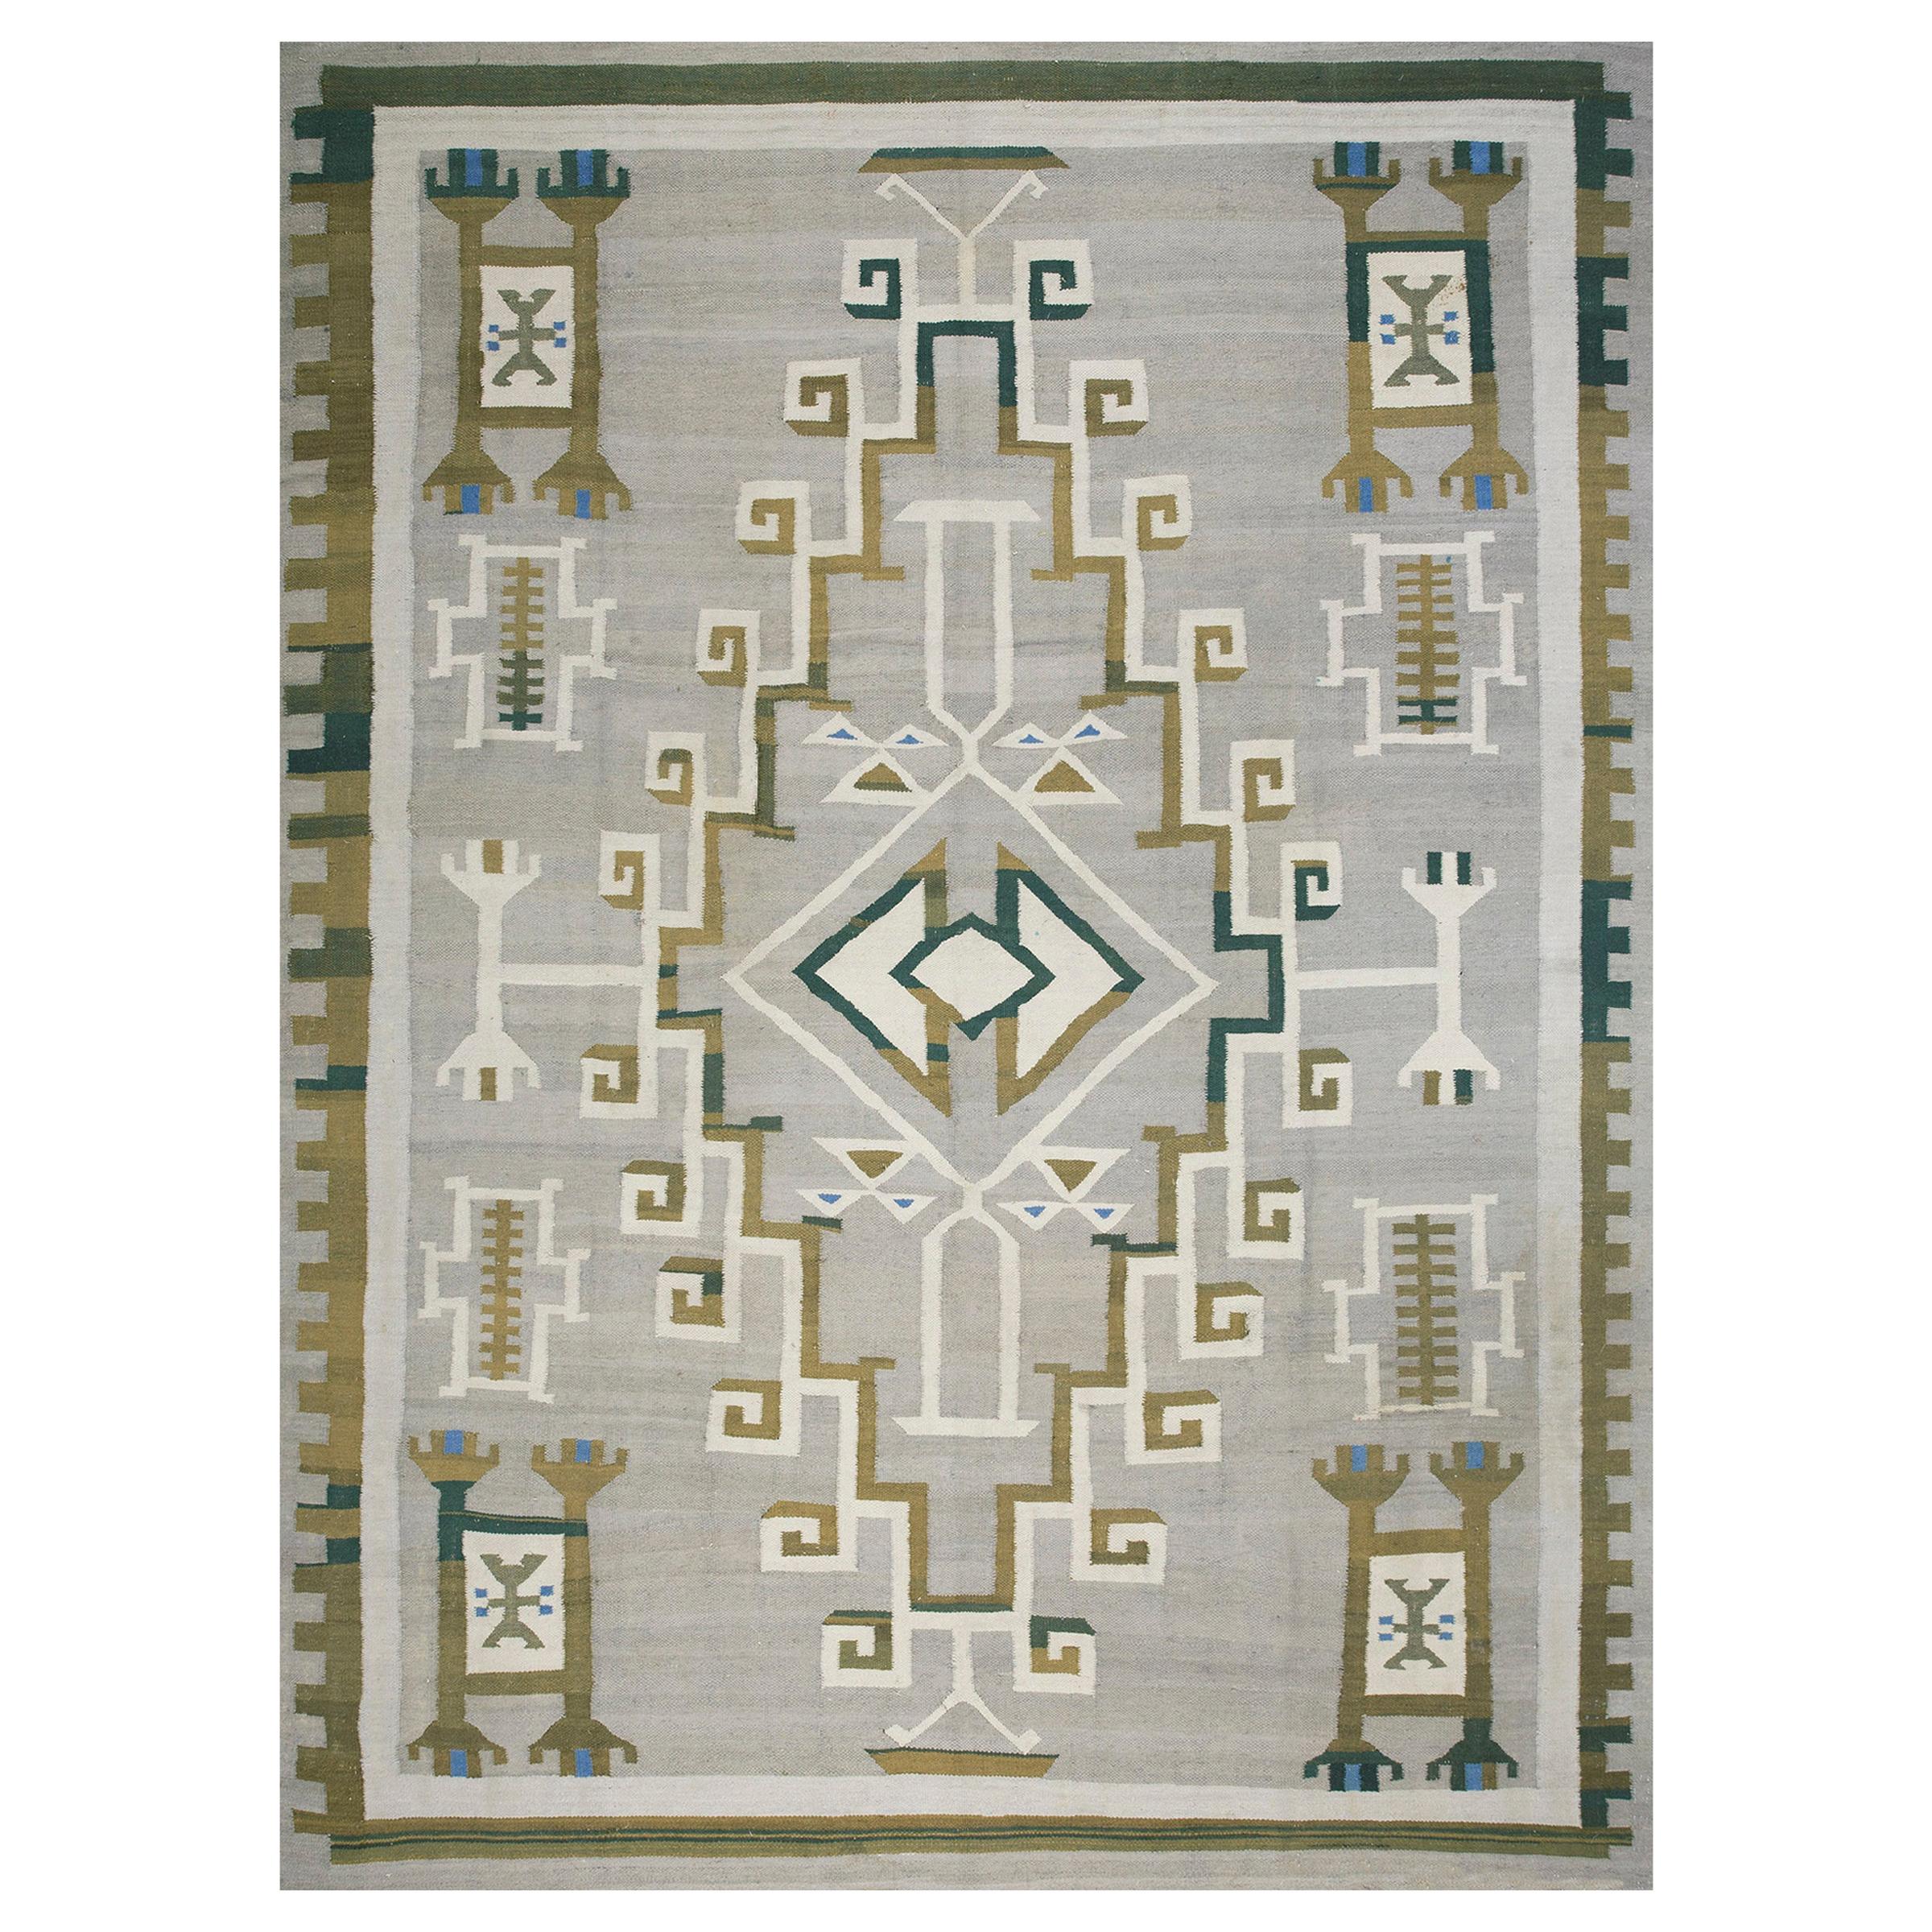 Early 20th Century American Navajo Carpet ( 9' x 11'10" - 275 x 360 )